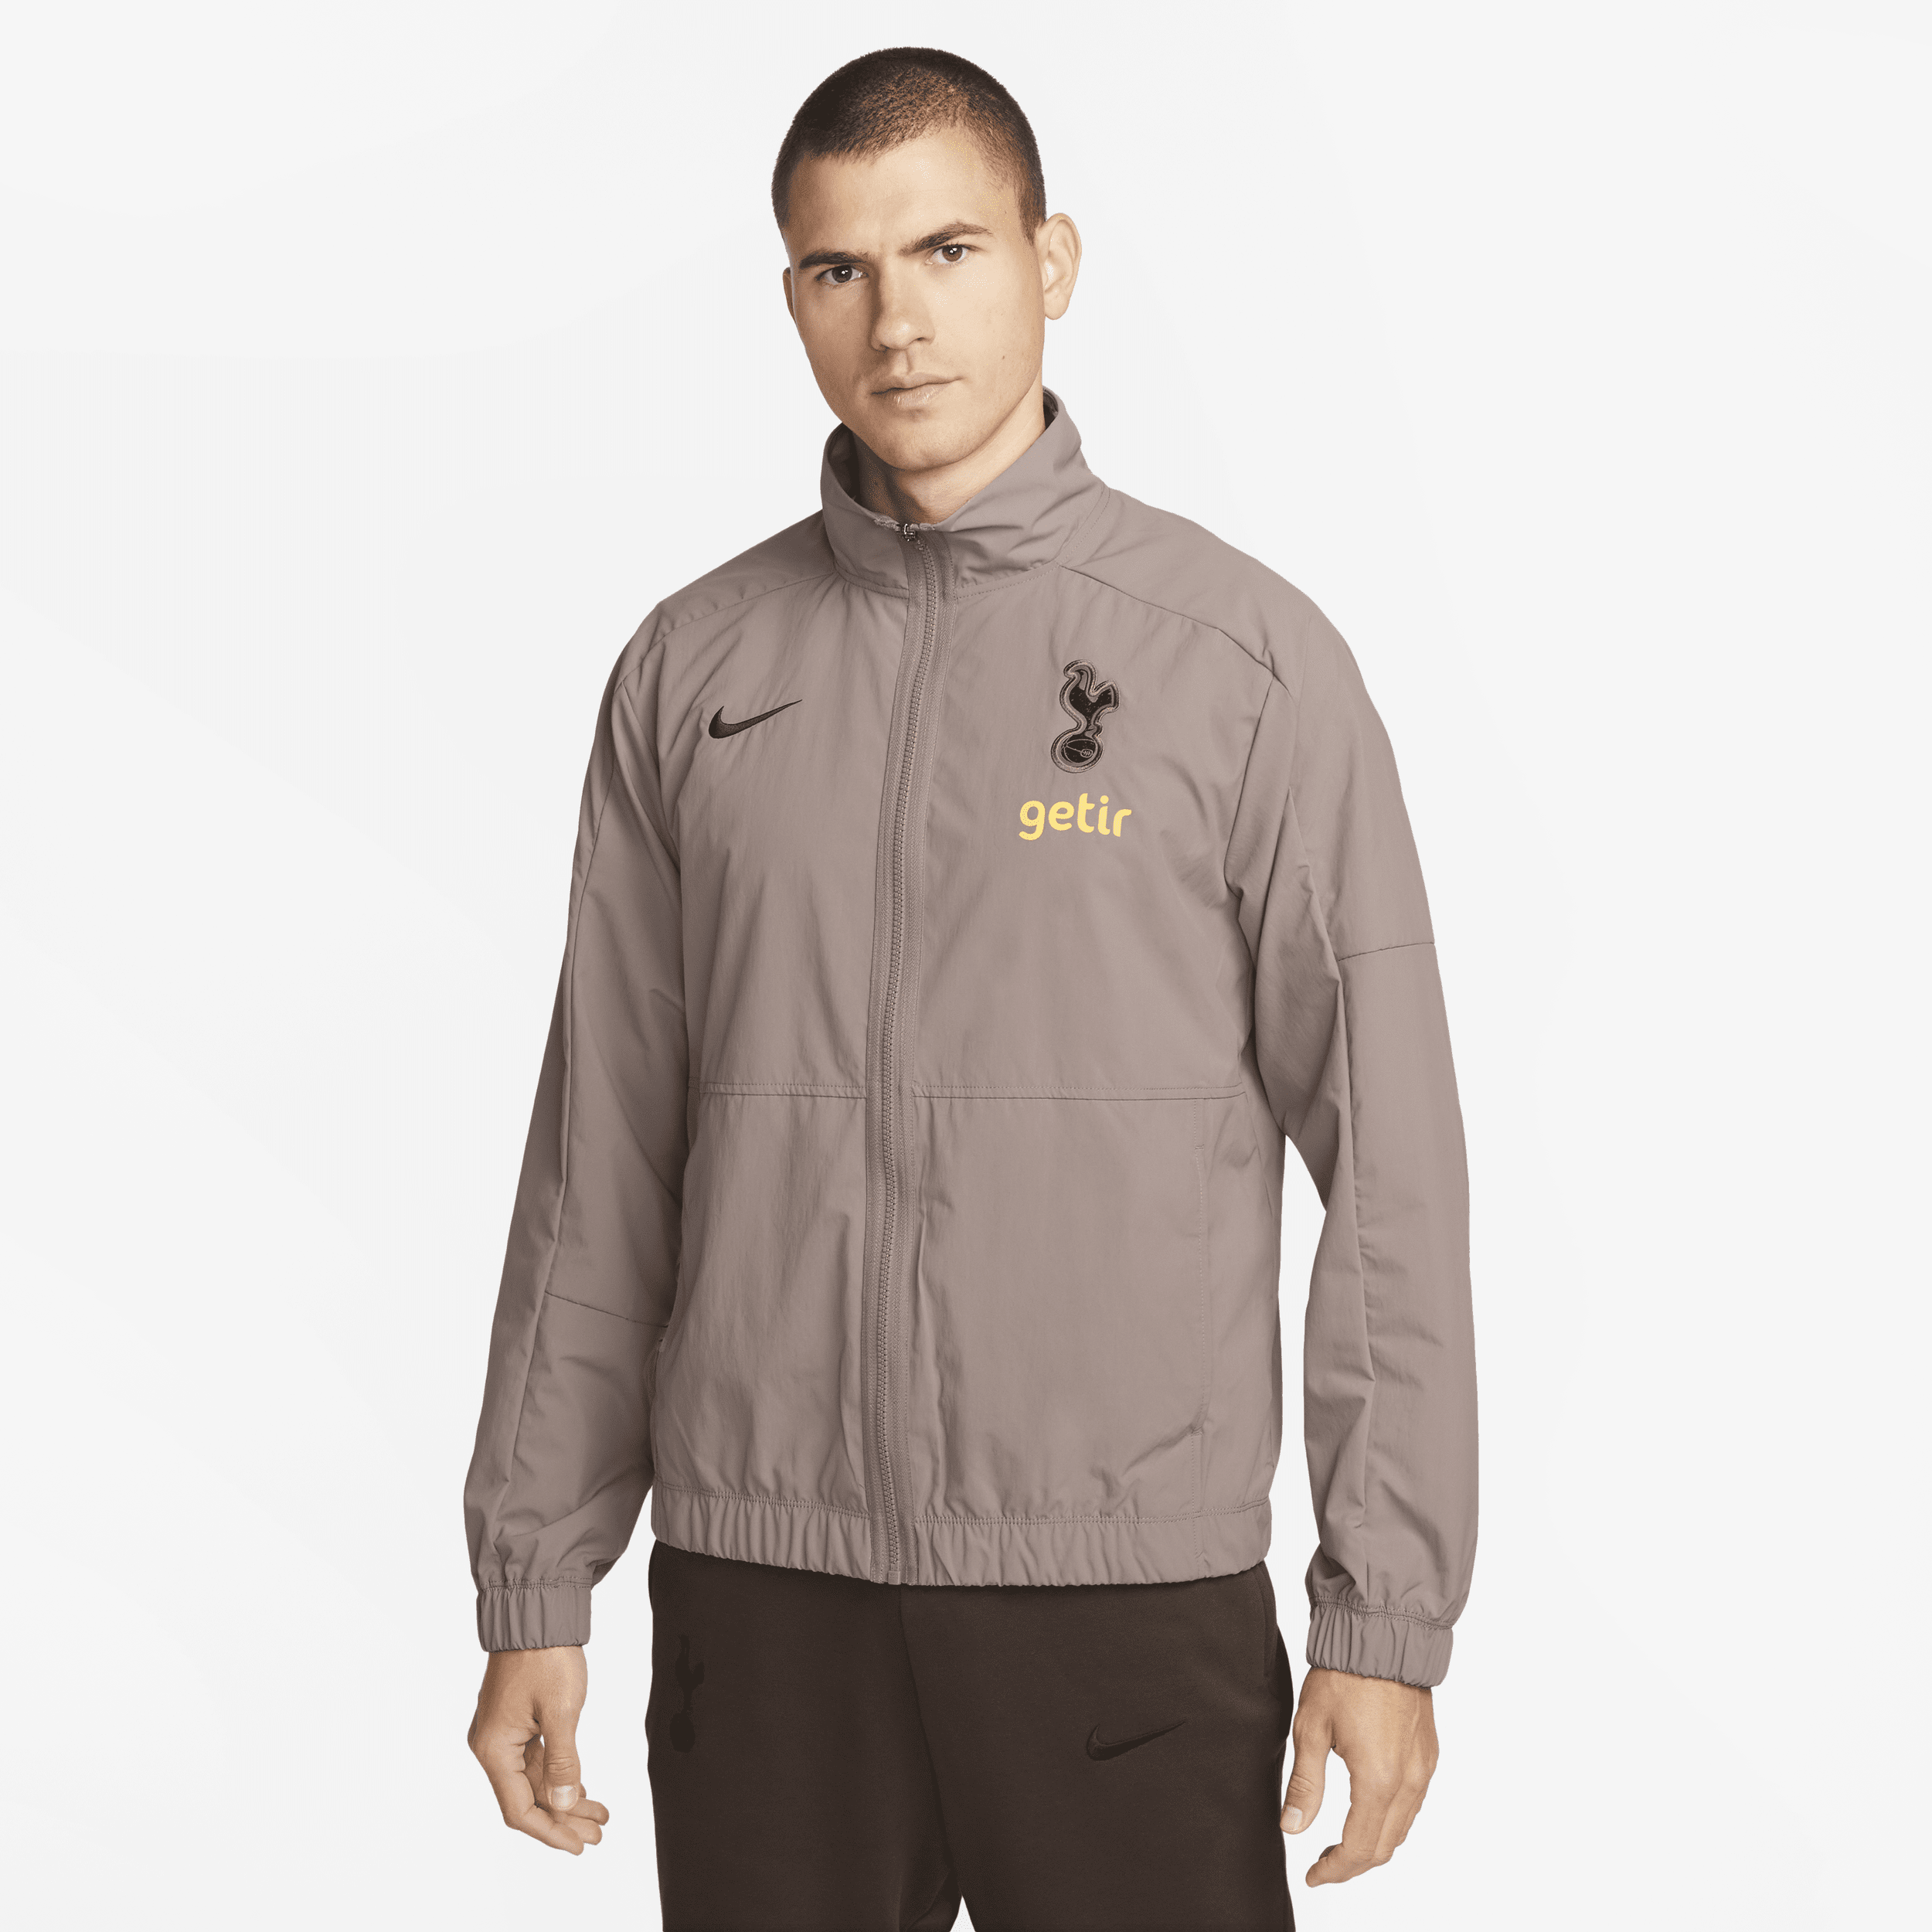 Vævet Tottenham Hotspur Revival Third Nike Football-jakke til mænd - brun